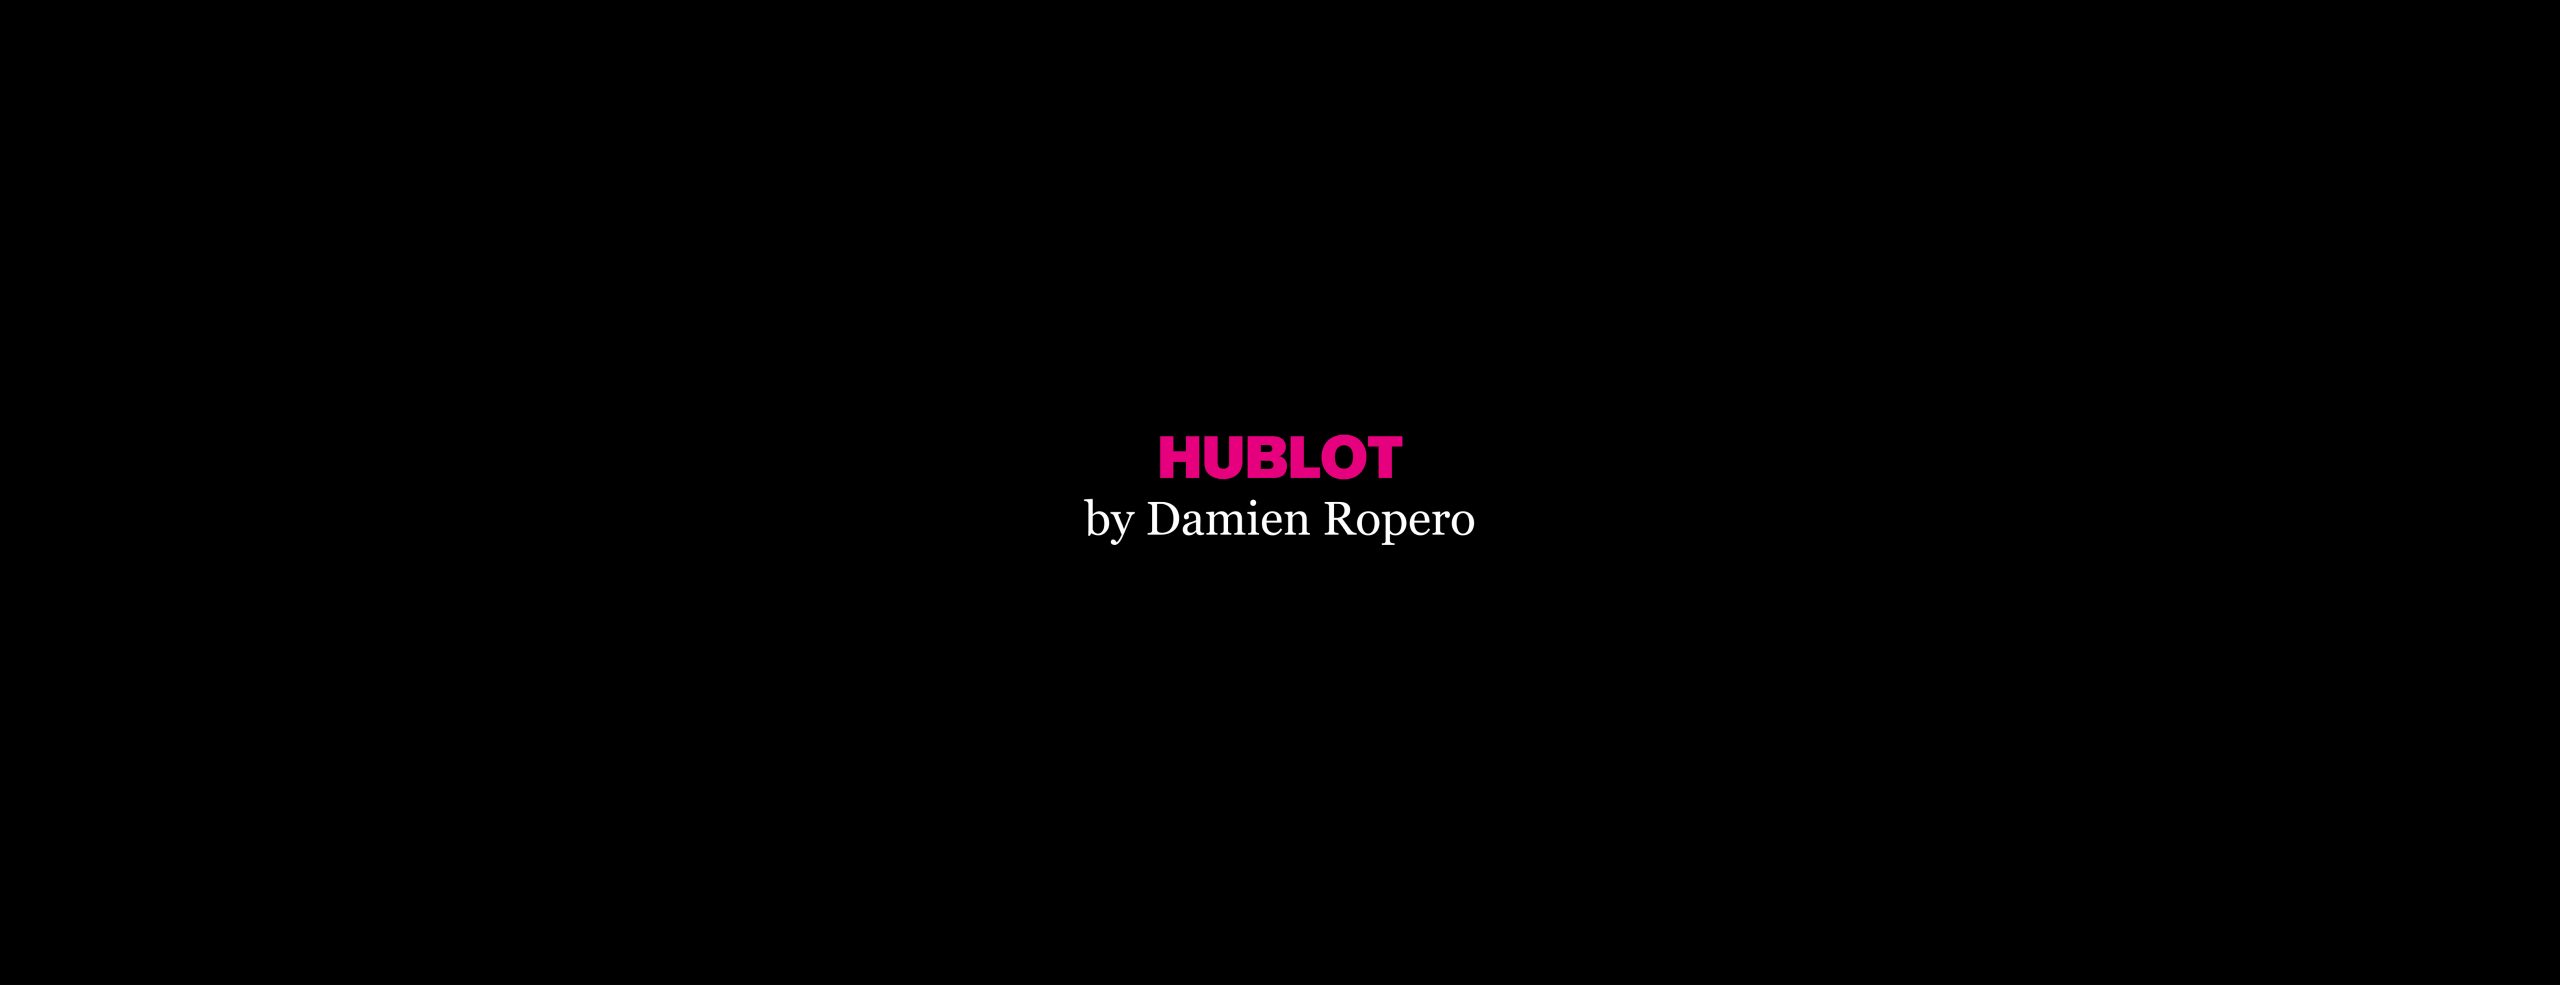 Hublot by Damien Ropero